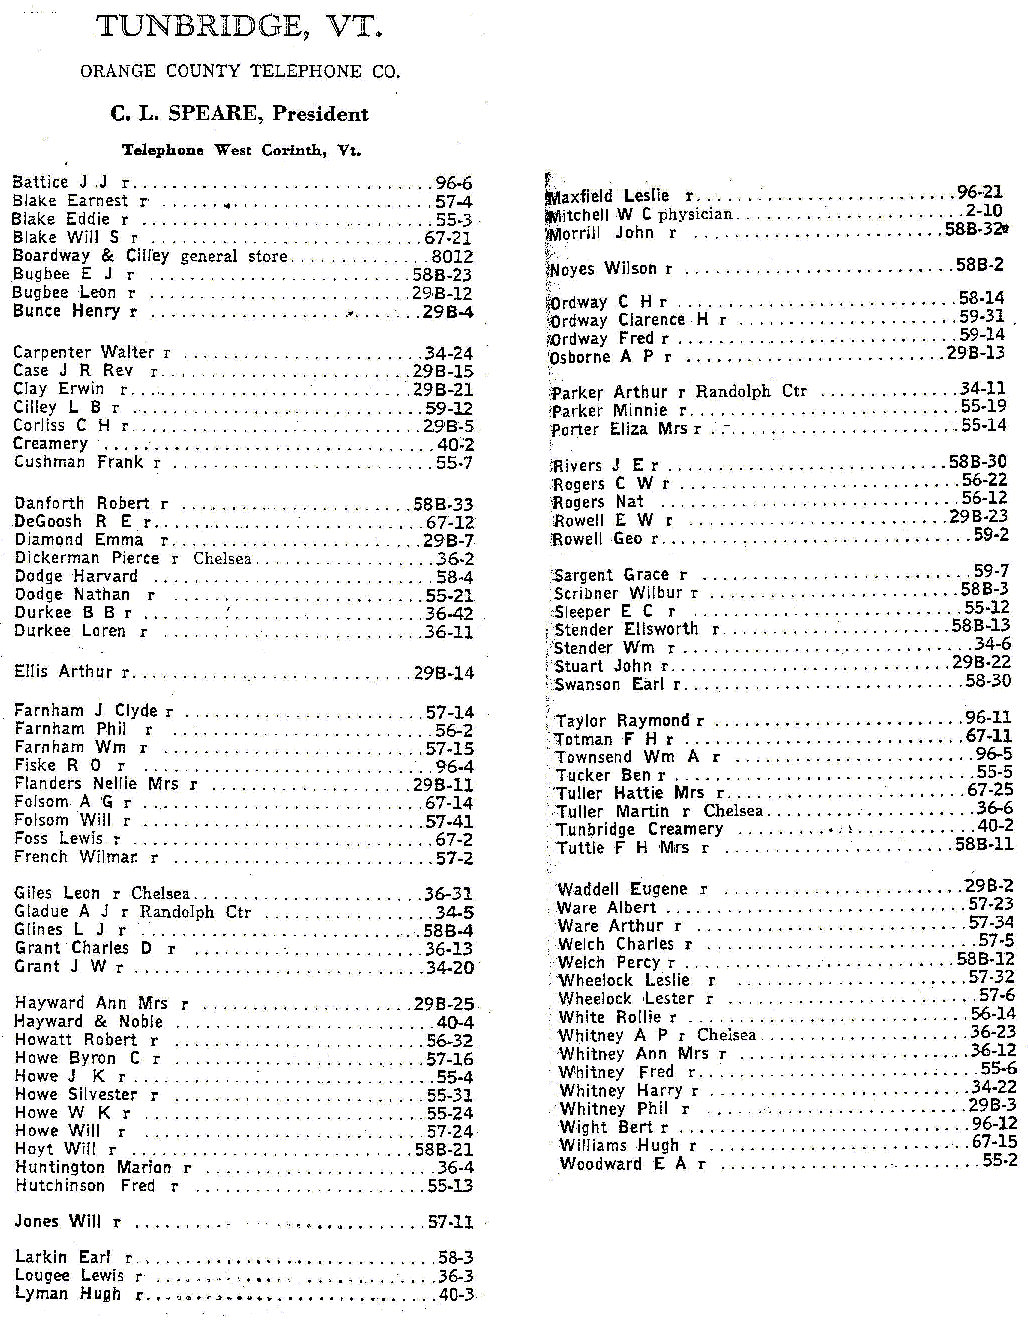 1928 Tunbridge Vt Telephone Book - Page 48